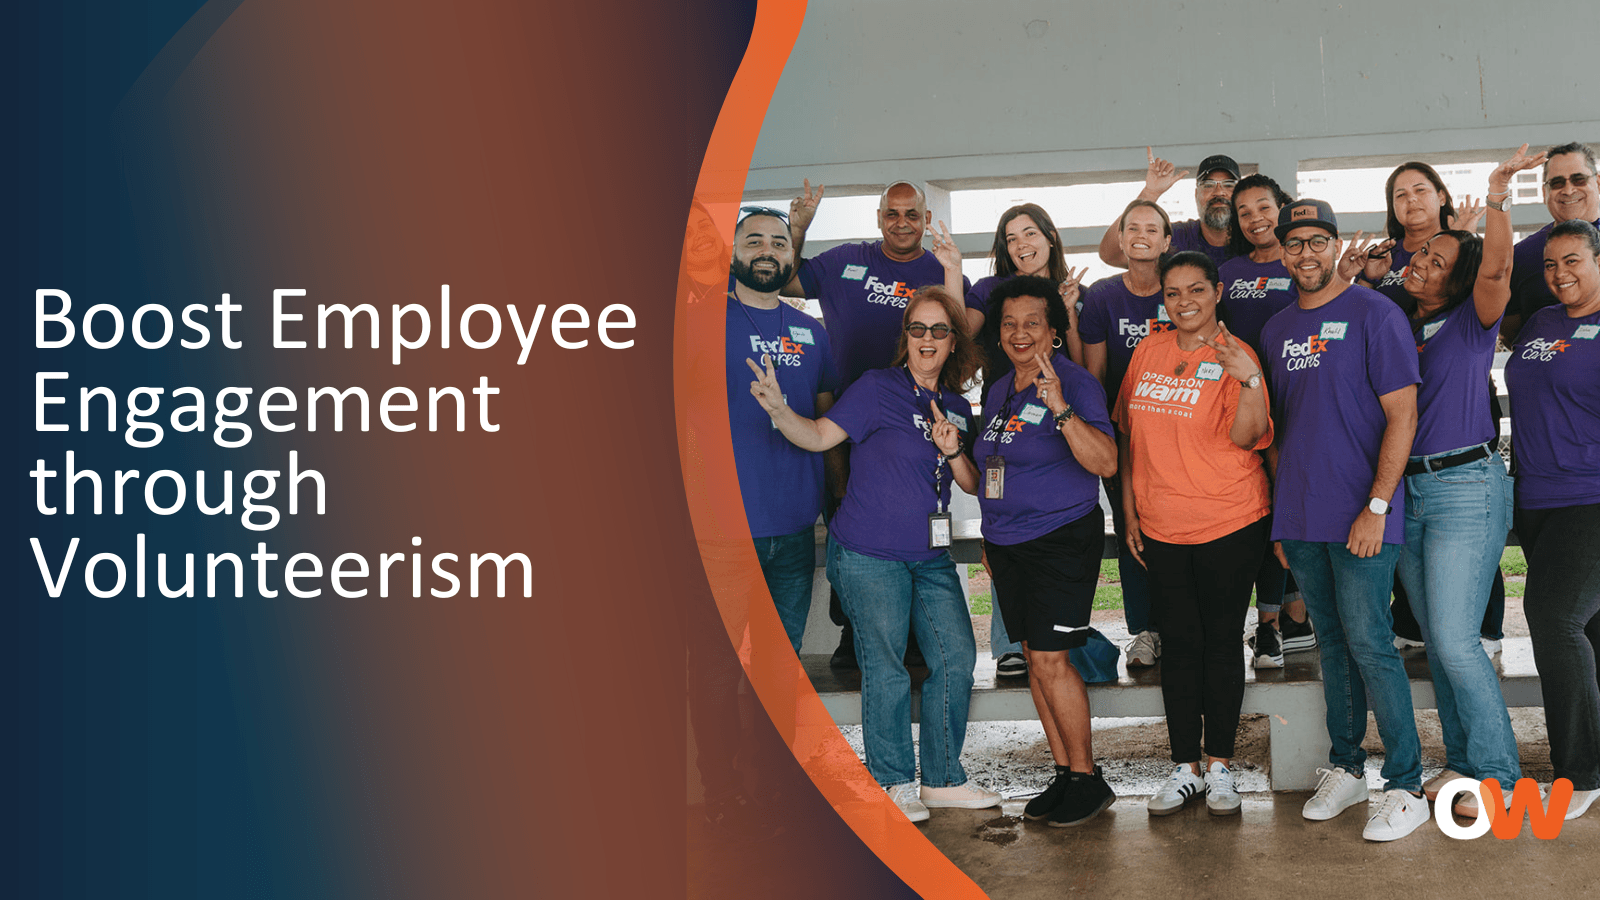 Boost Employee Engagement through Volunteerism